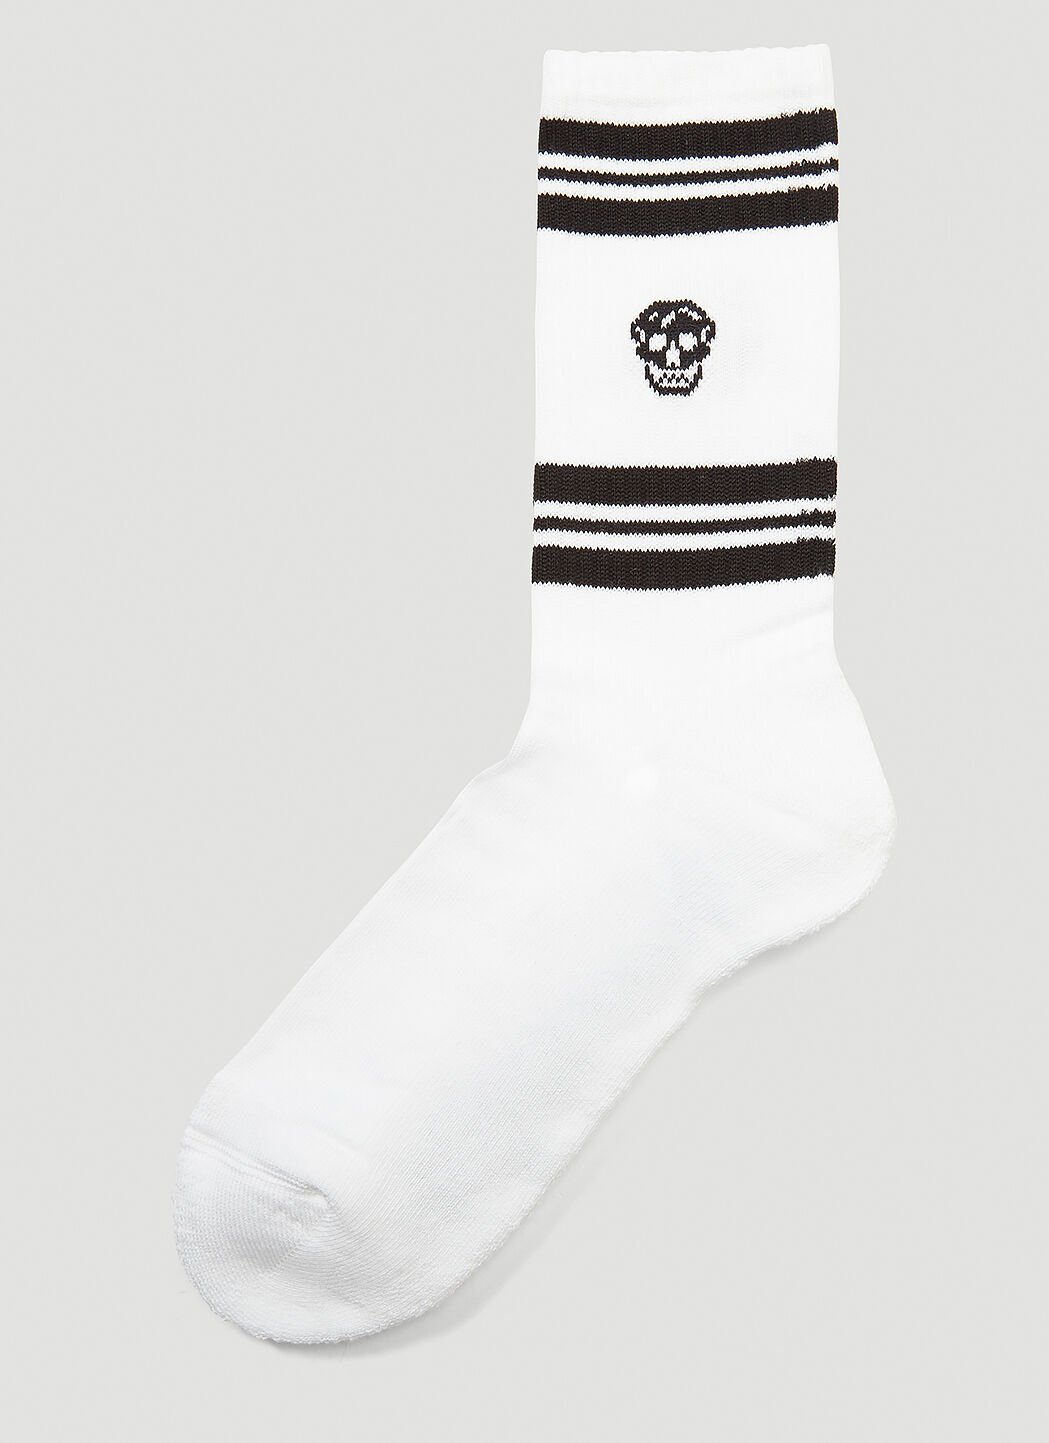 Balenciaga Skull Socks Black bcs0153001